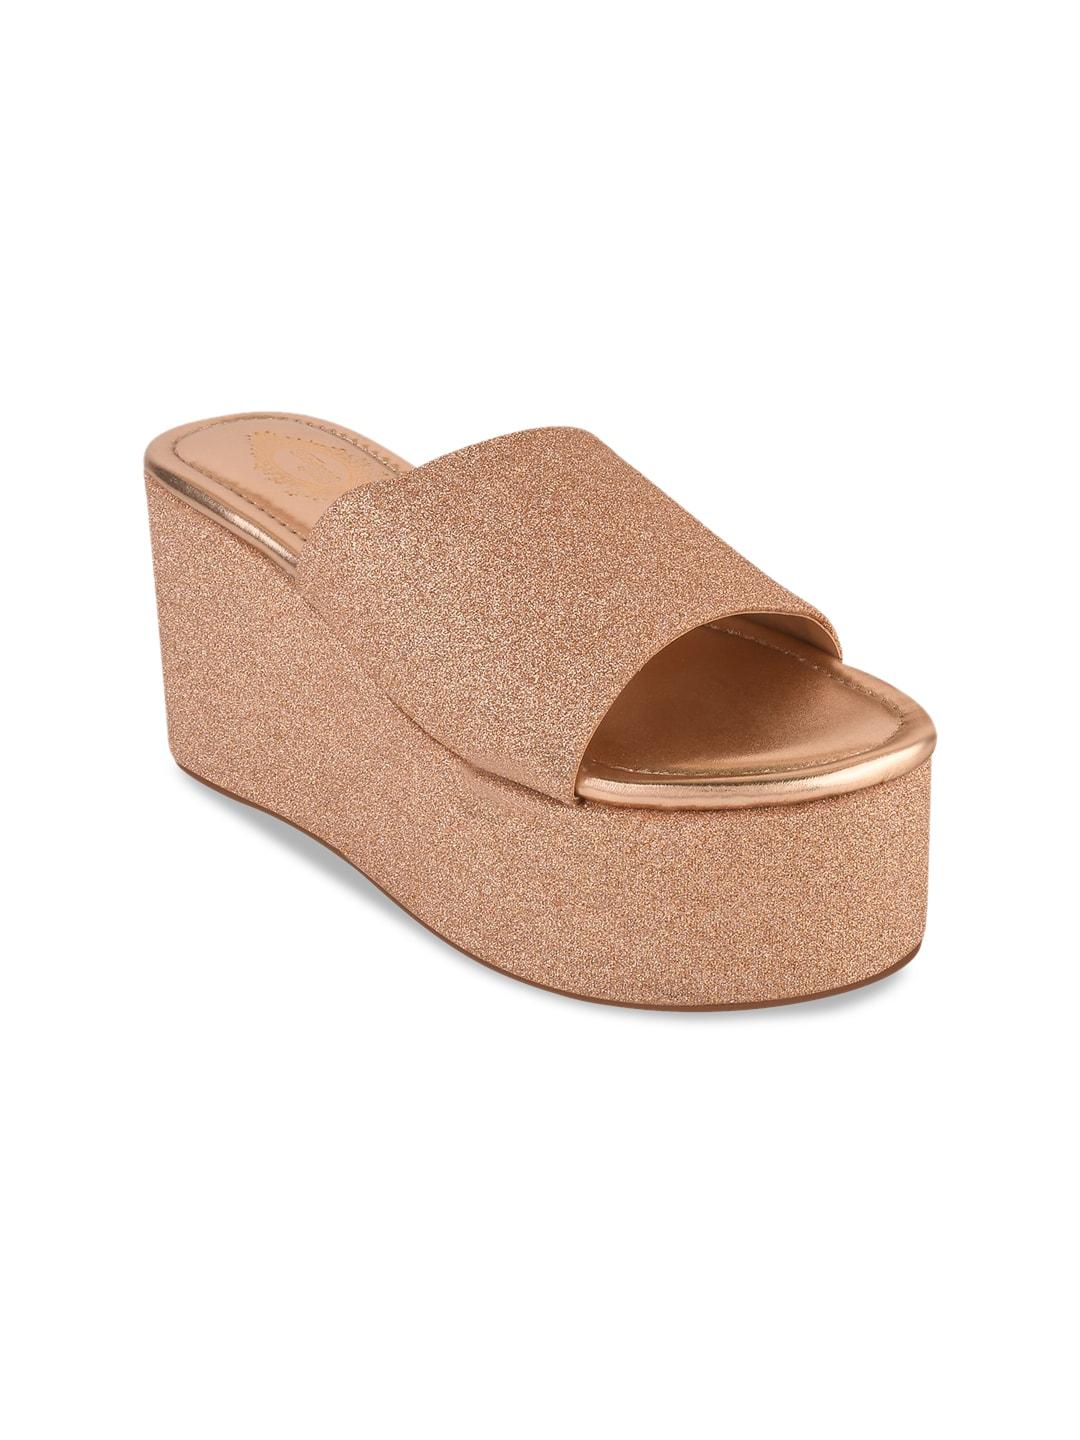 shoetopia girls round toe flatform heels